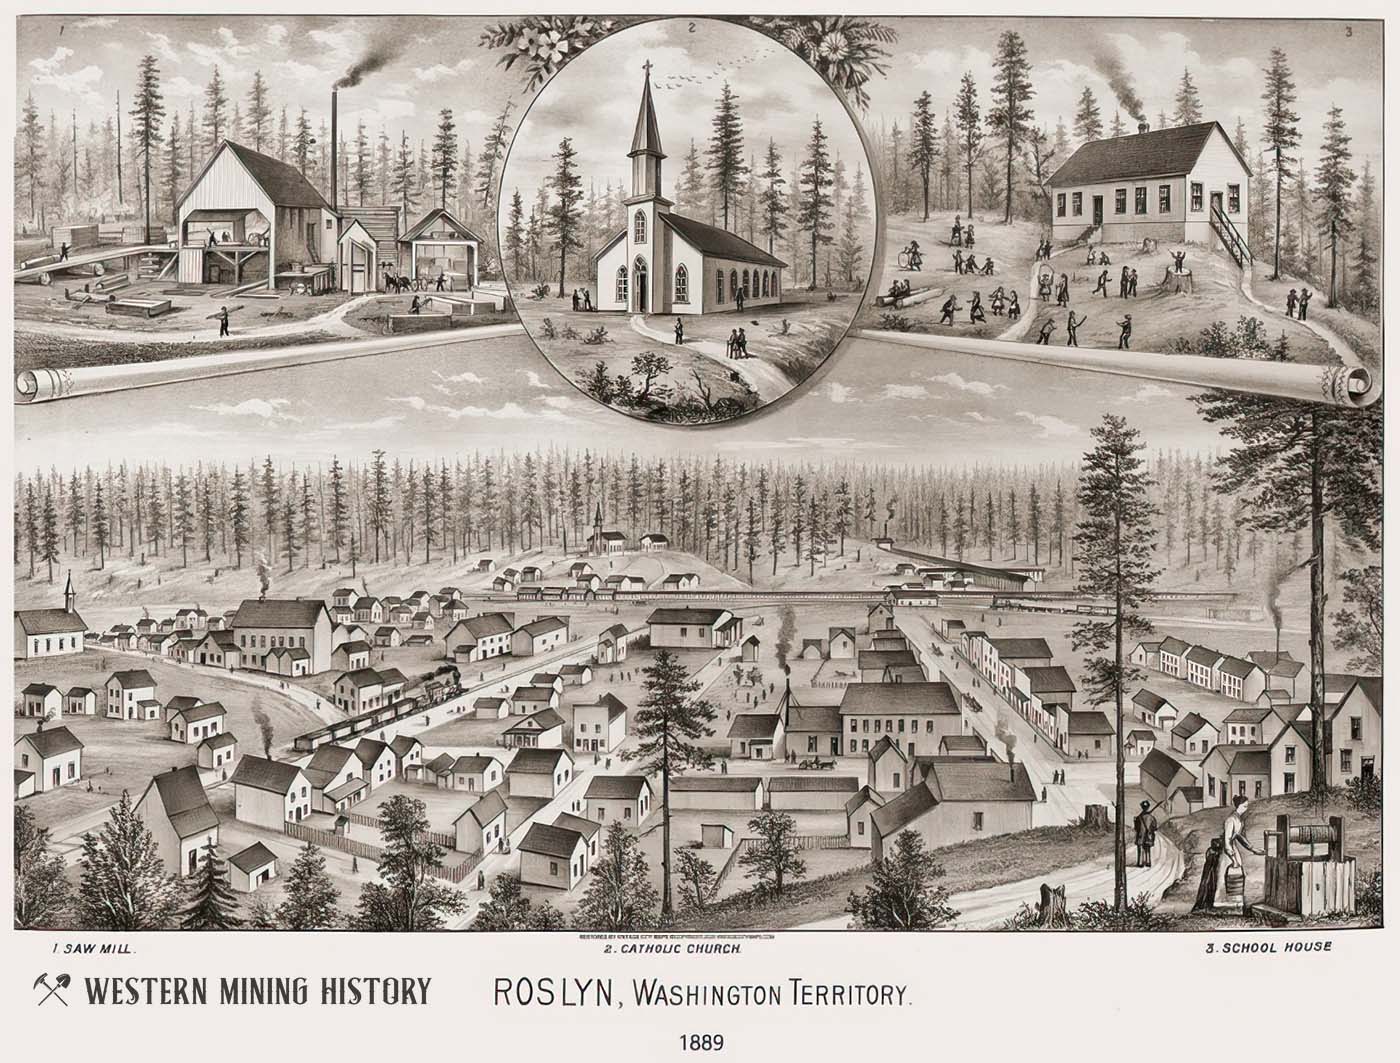 1889 illustration of Roslyn, Washington